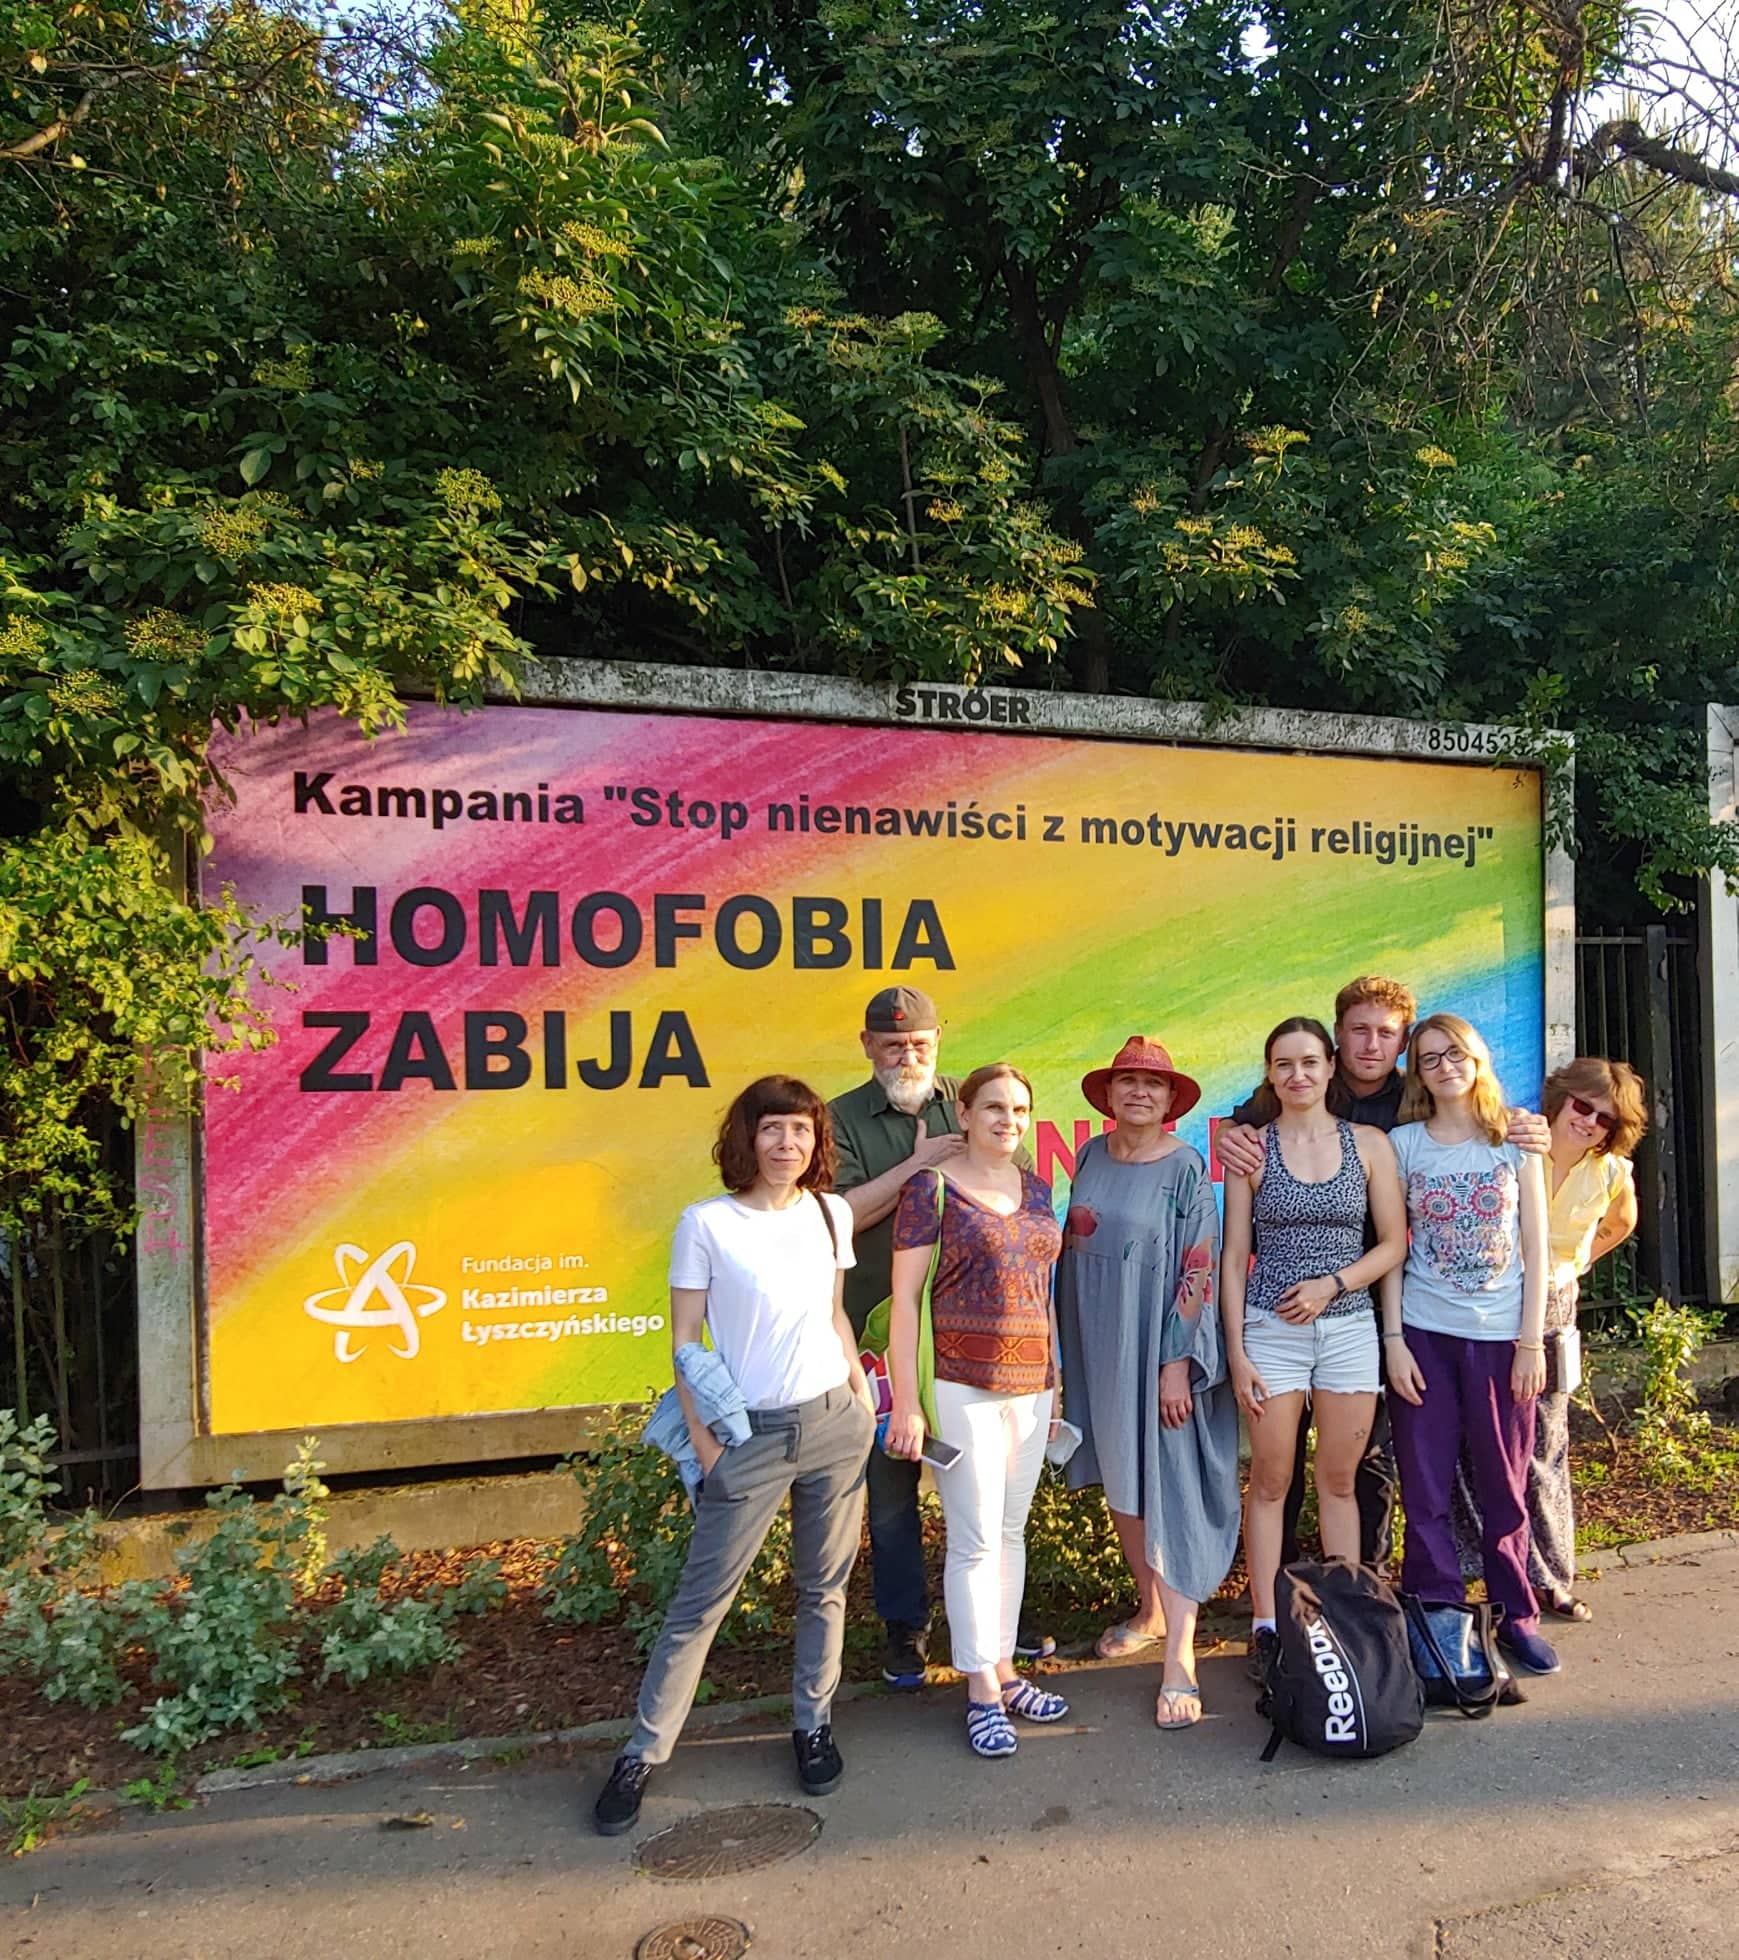 Gruppenfoto vor einem "Homophobia kills"-Plakat